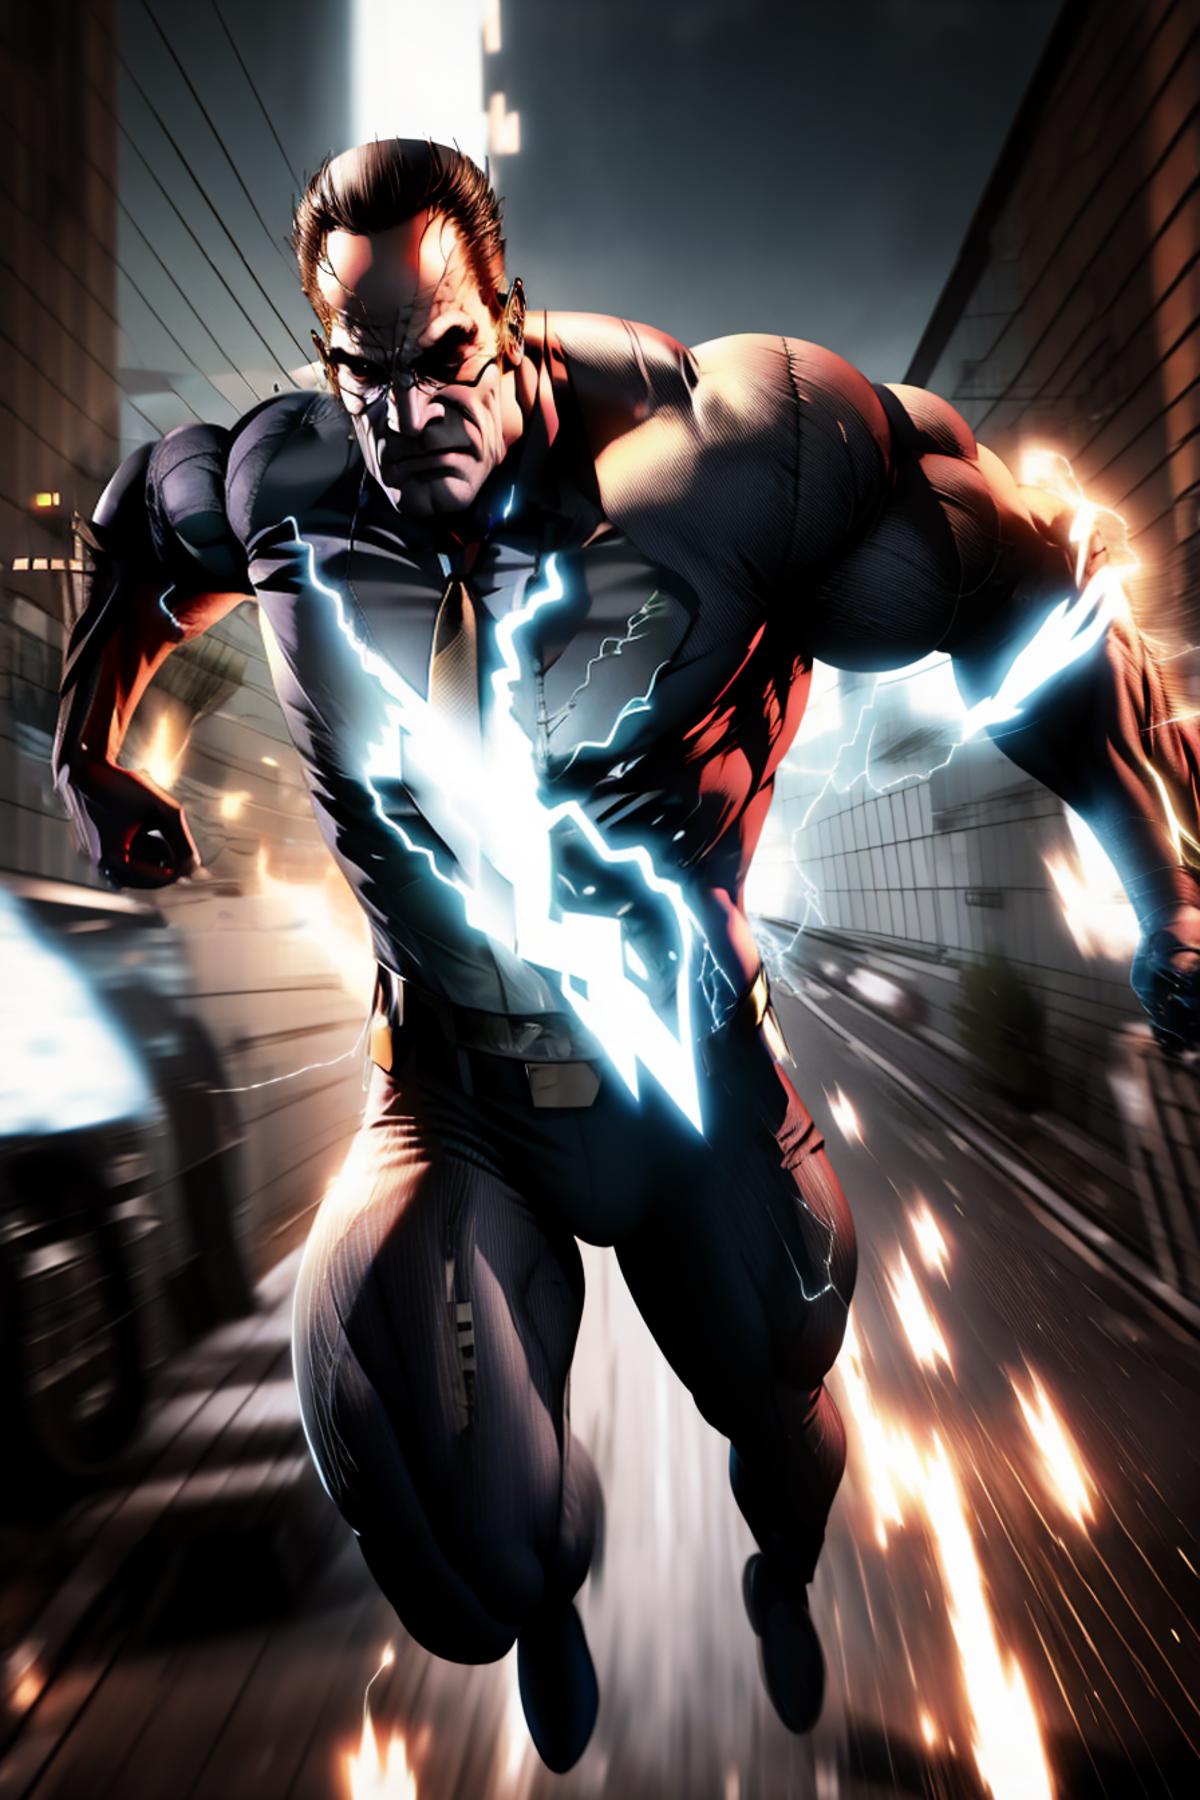 A comic book superhero character with lightning bolts as he runs through a city street.